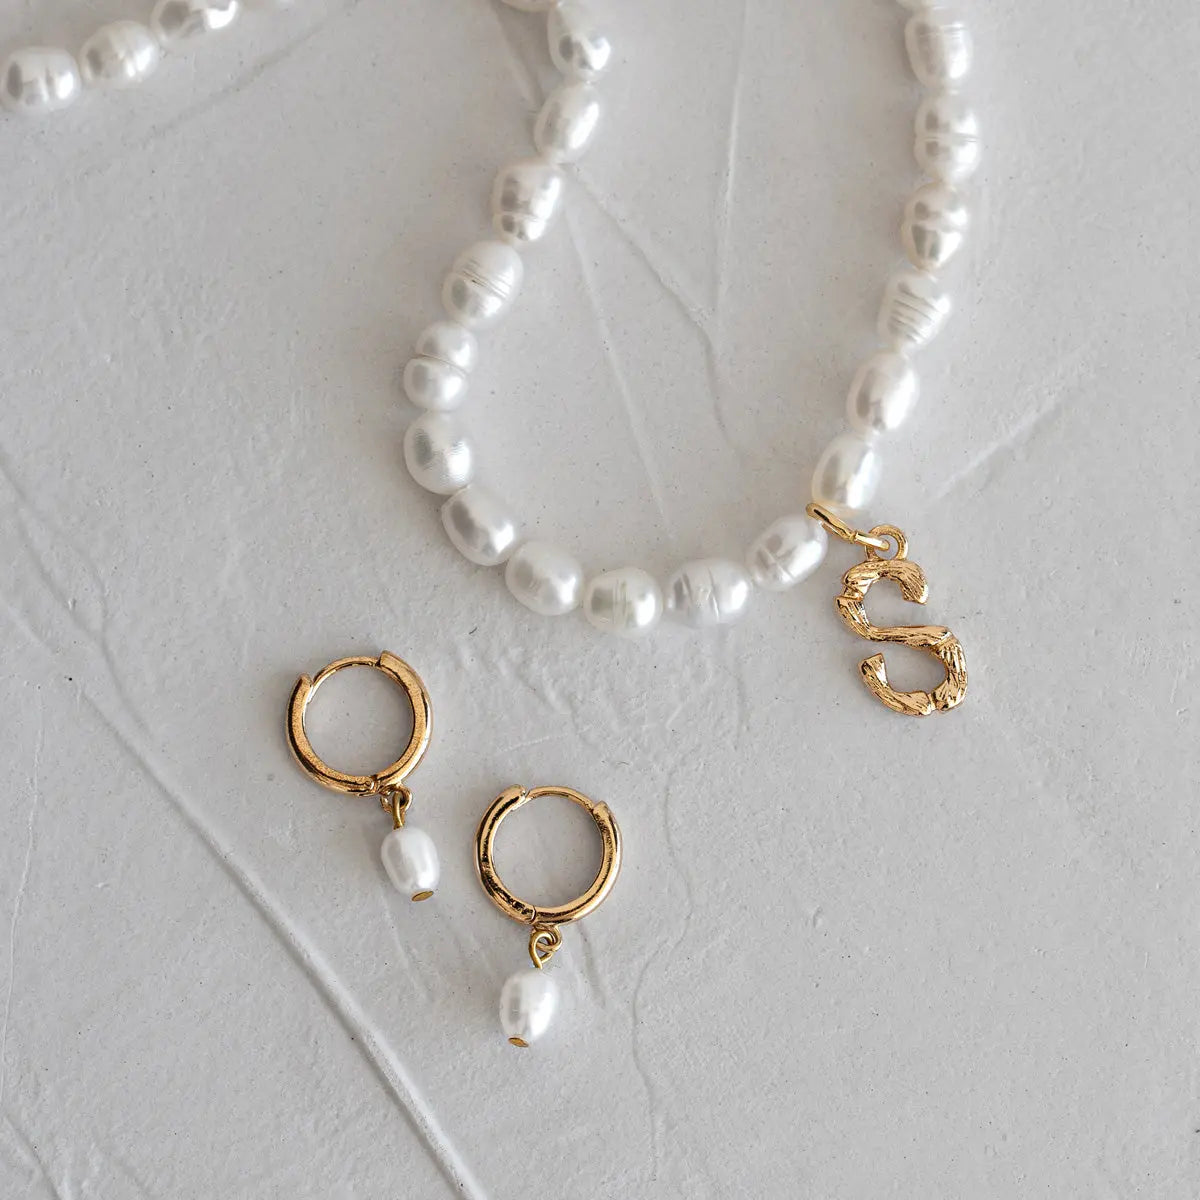 Personalisierte Perlenkette mit Perlenohrringen Set